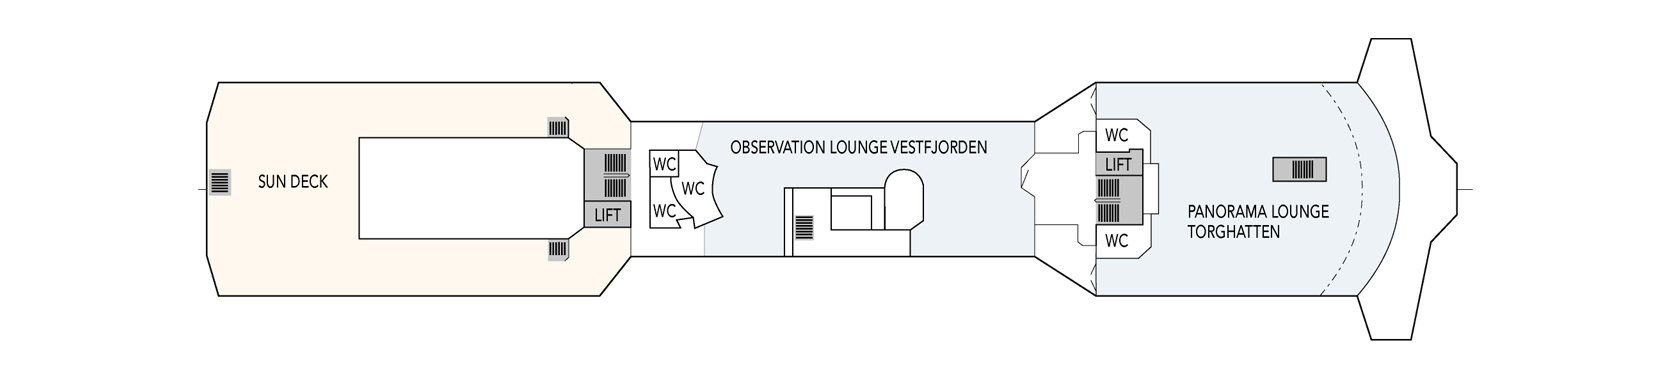 1548636348.2703_d262_Hurtigruten MS Nordnorge Deck Plans Deck 7.png